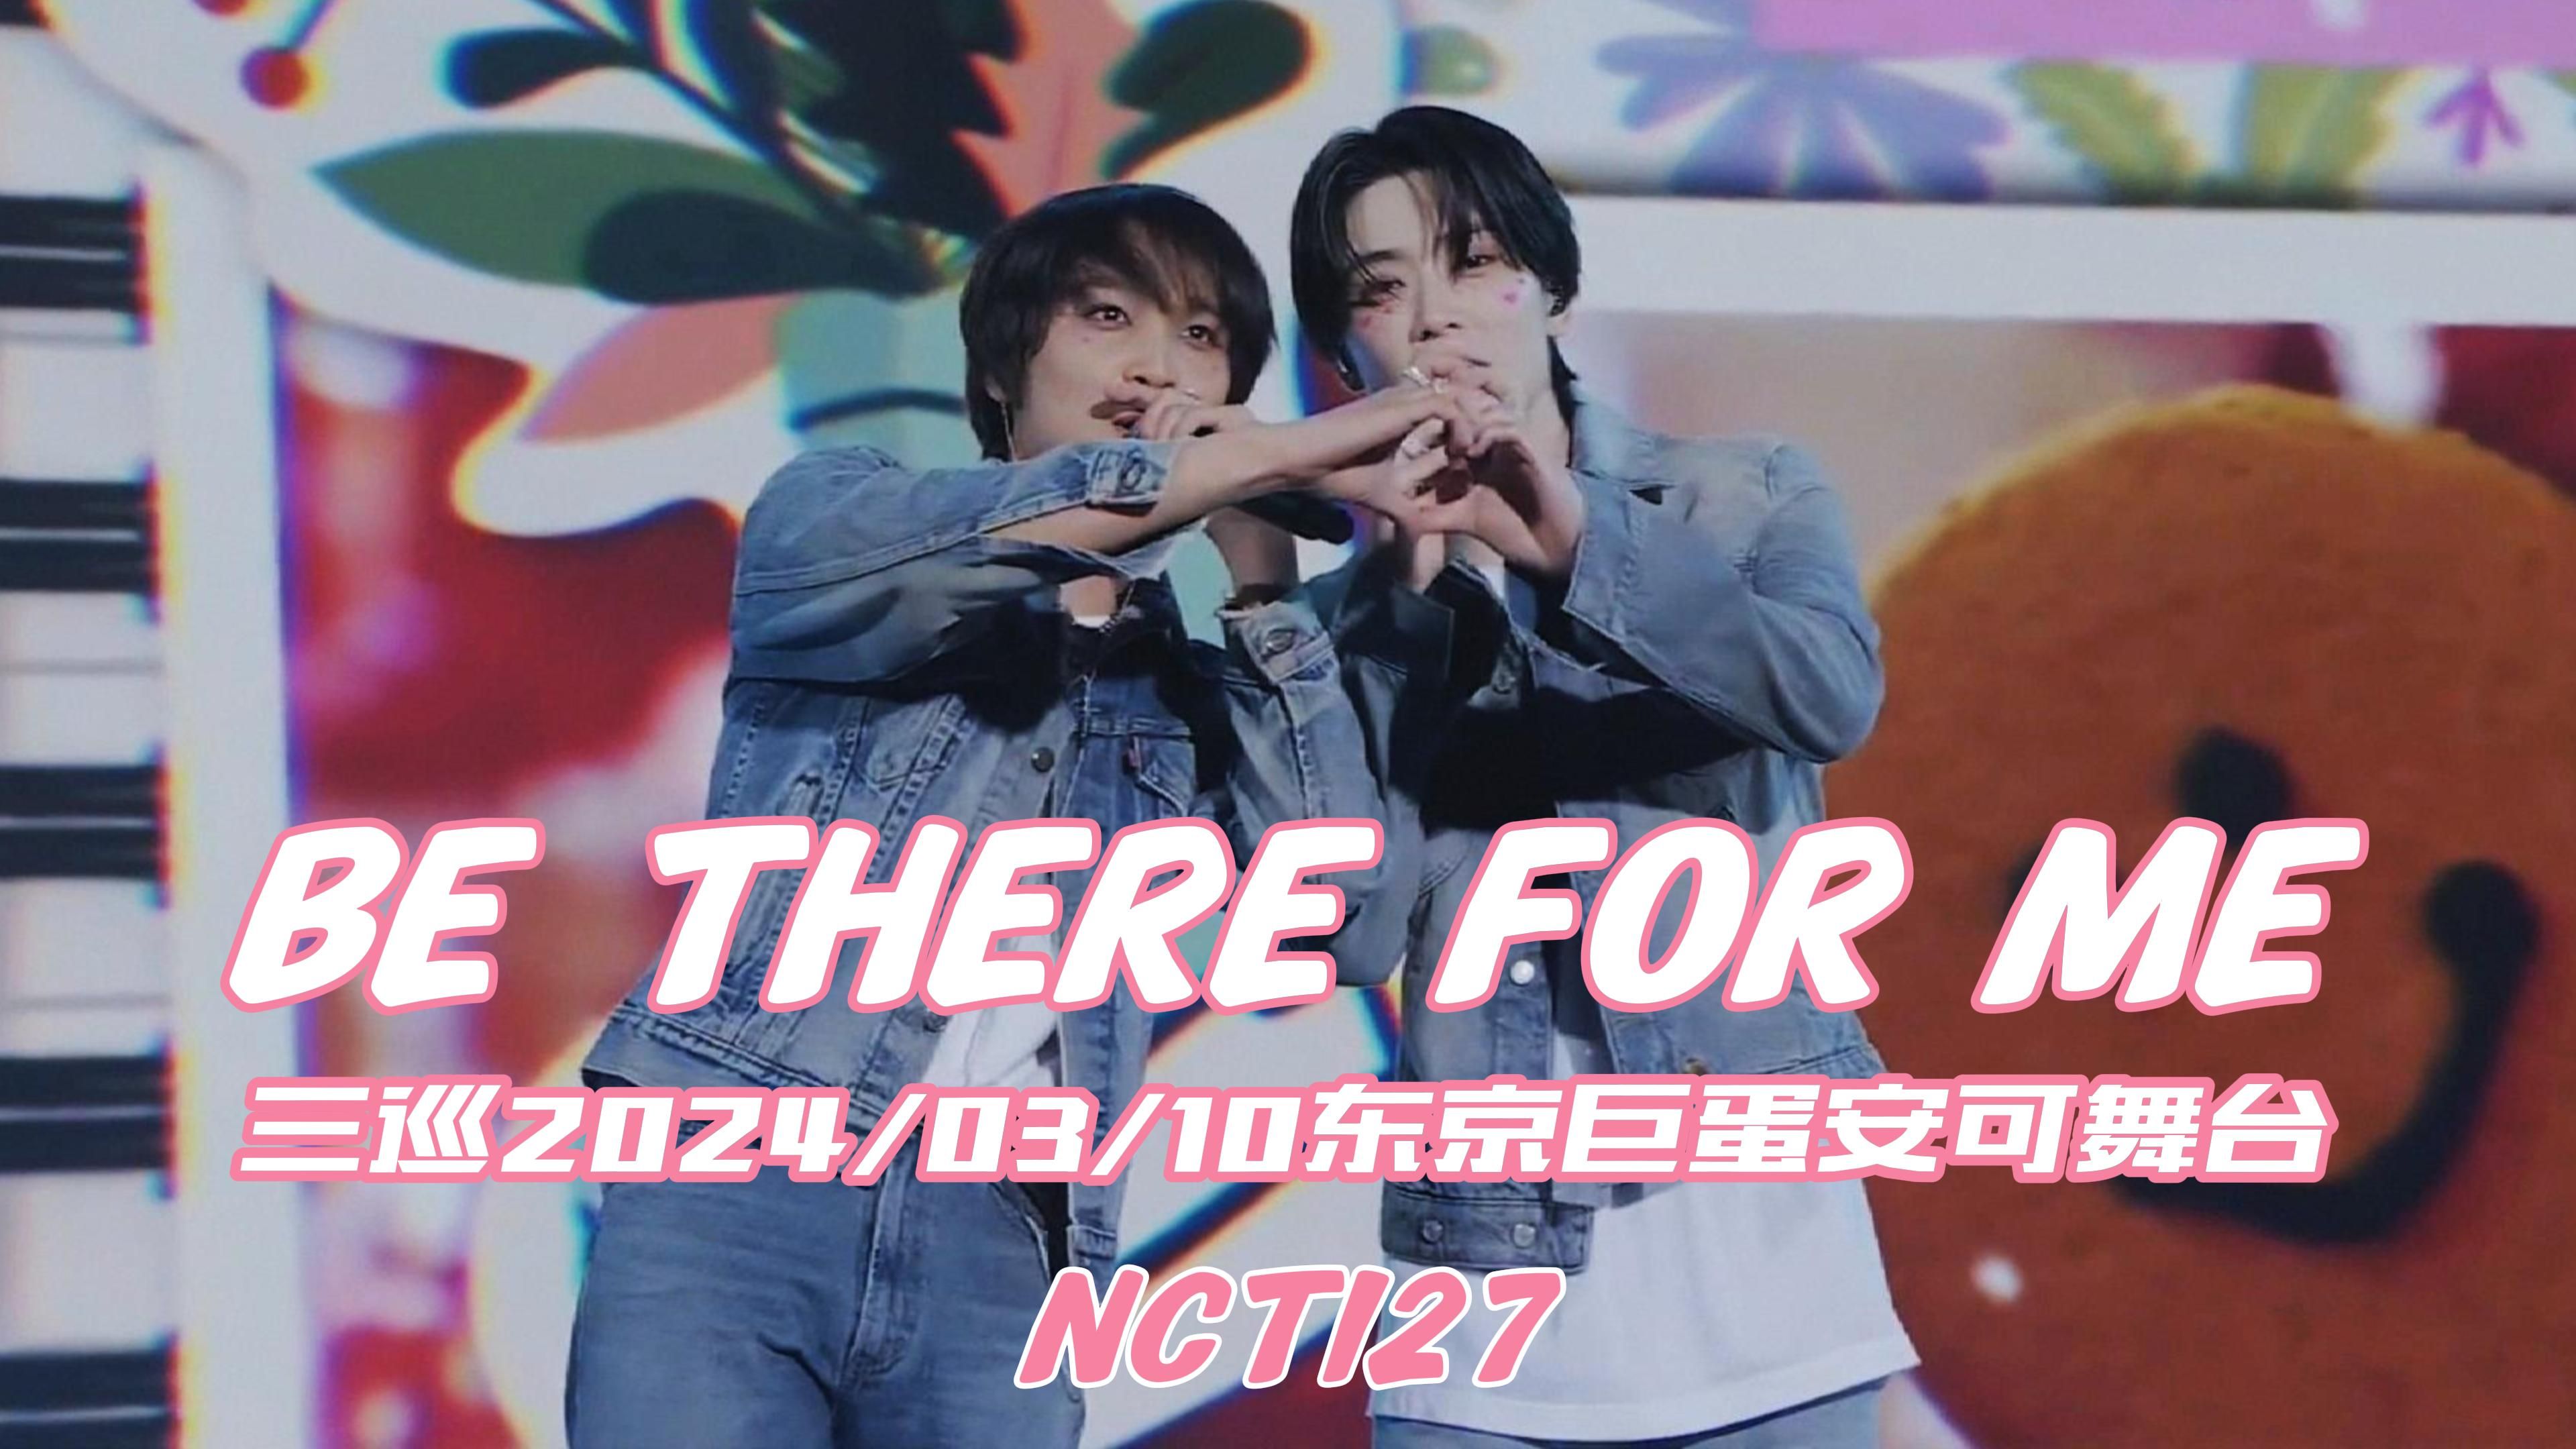 【NCT127中字】“其实啊 只要一起歌唱就行了 我们7💞”真是充满爱意和治愈的舞台~《BE THERE FOR ME》东京巨蛋安可舞台